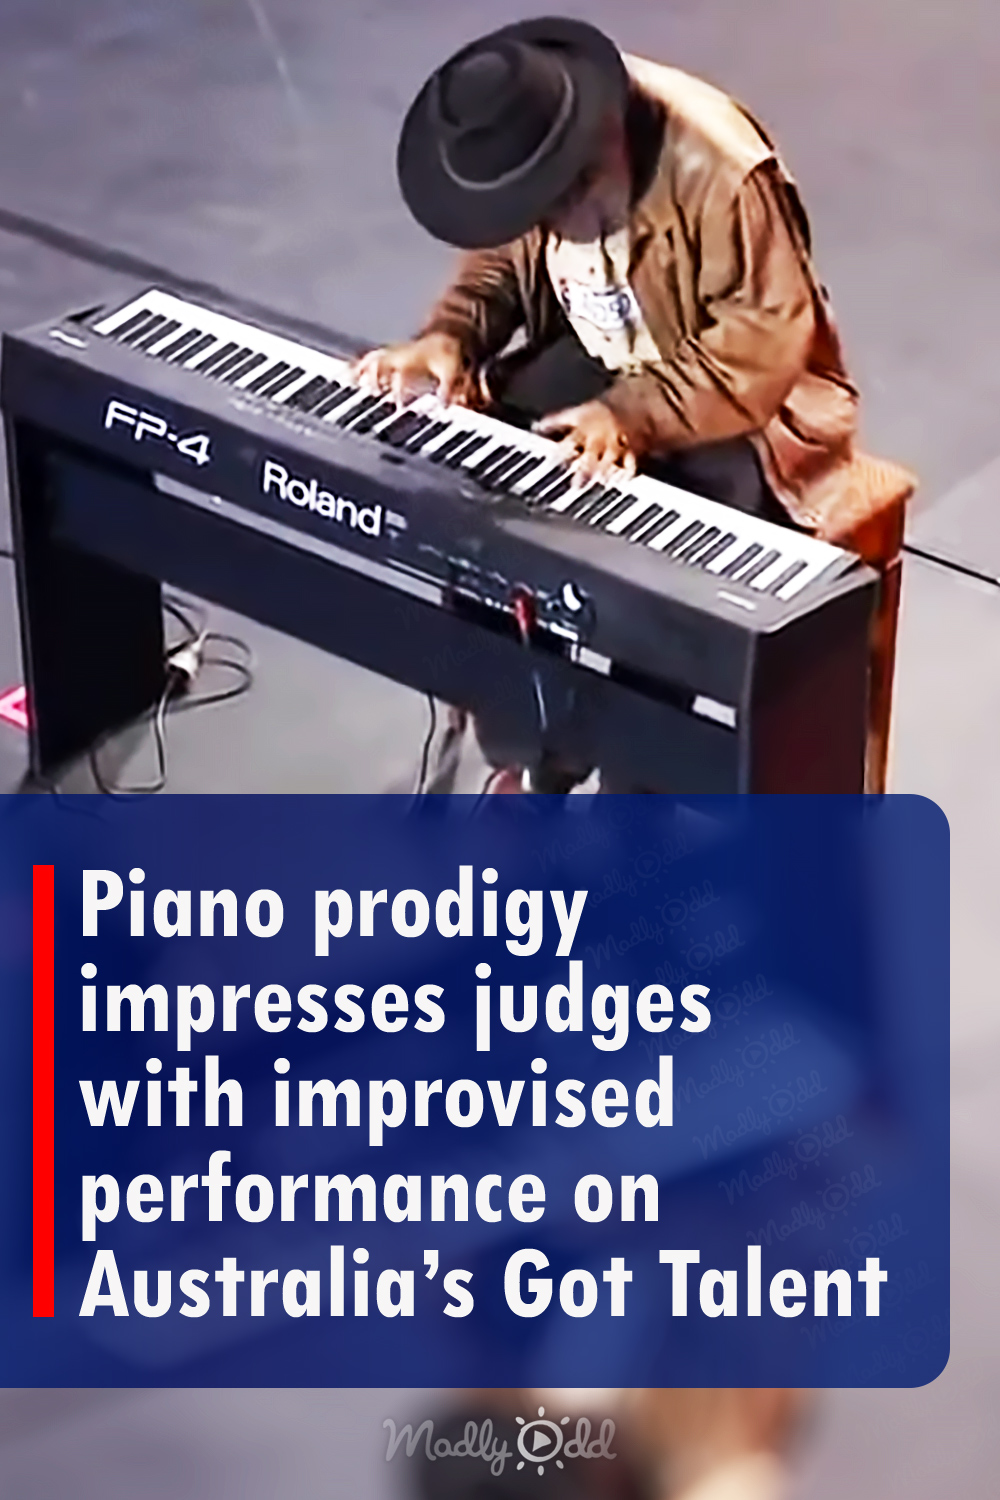 Piano prodigy impresses judges with improvised performance on Australia’s Got Talent